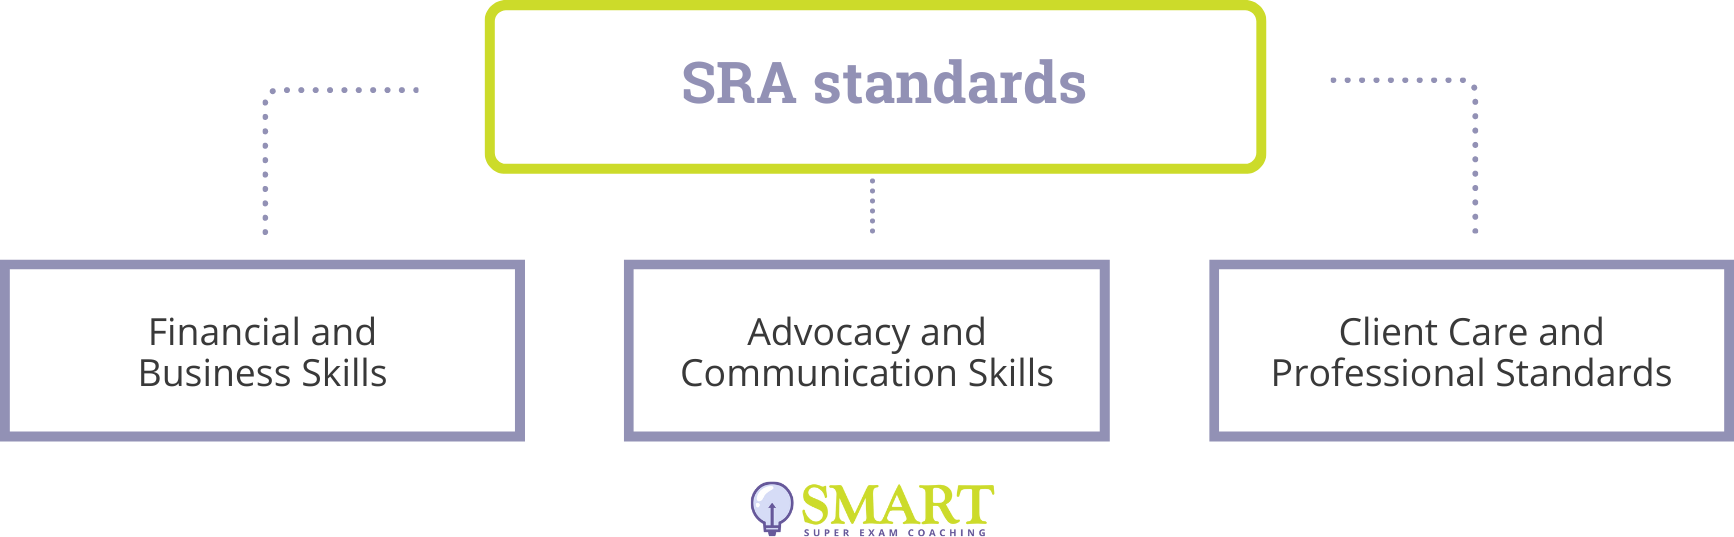 SRA (Solicitors Regulation Authority) Standards